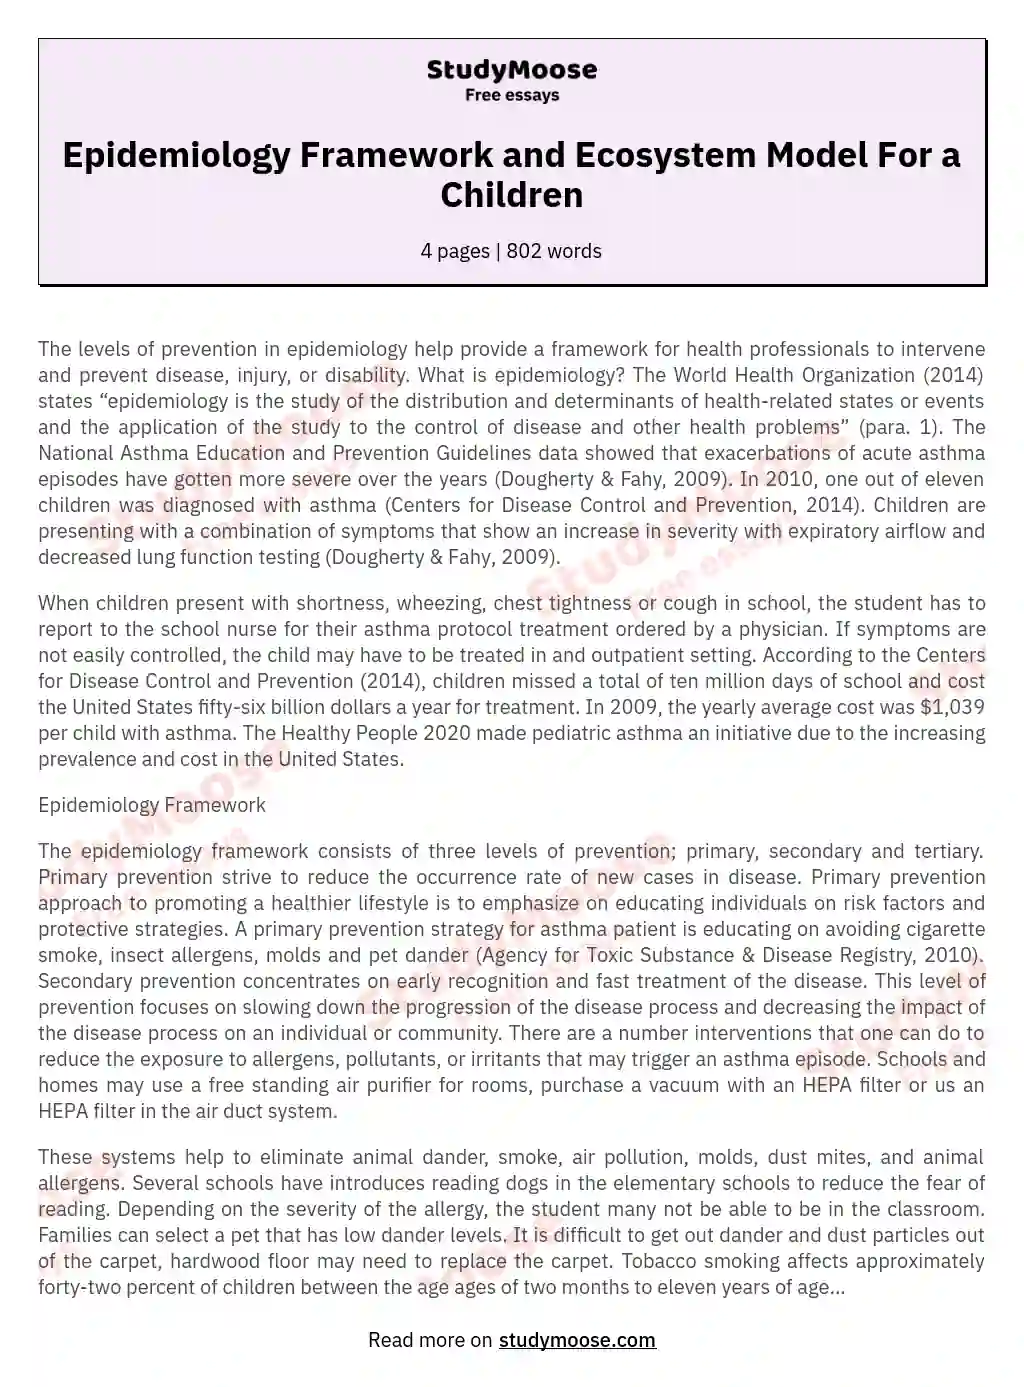 Epidemiology Framework and Ecosystem Model For a Children essay